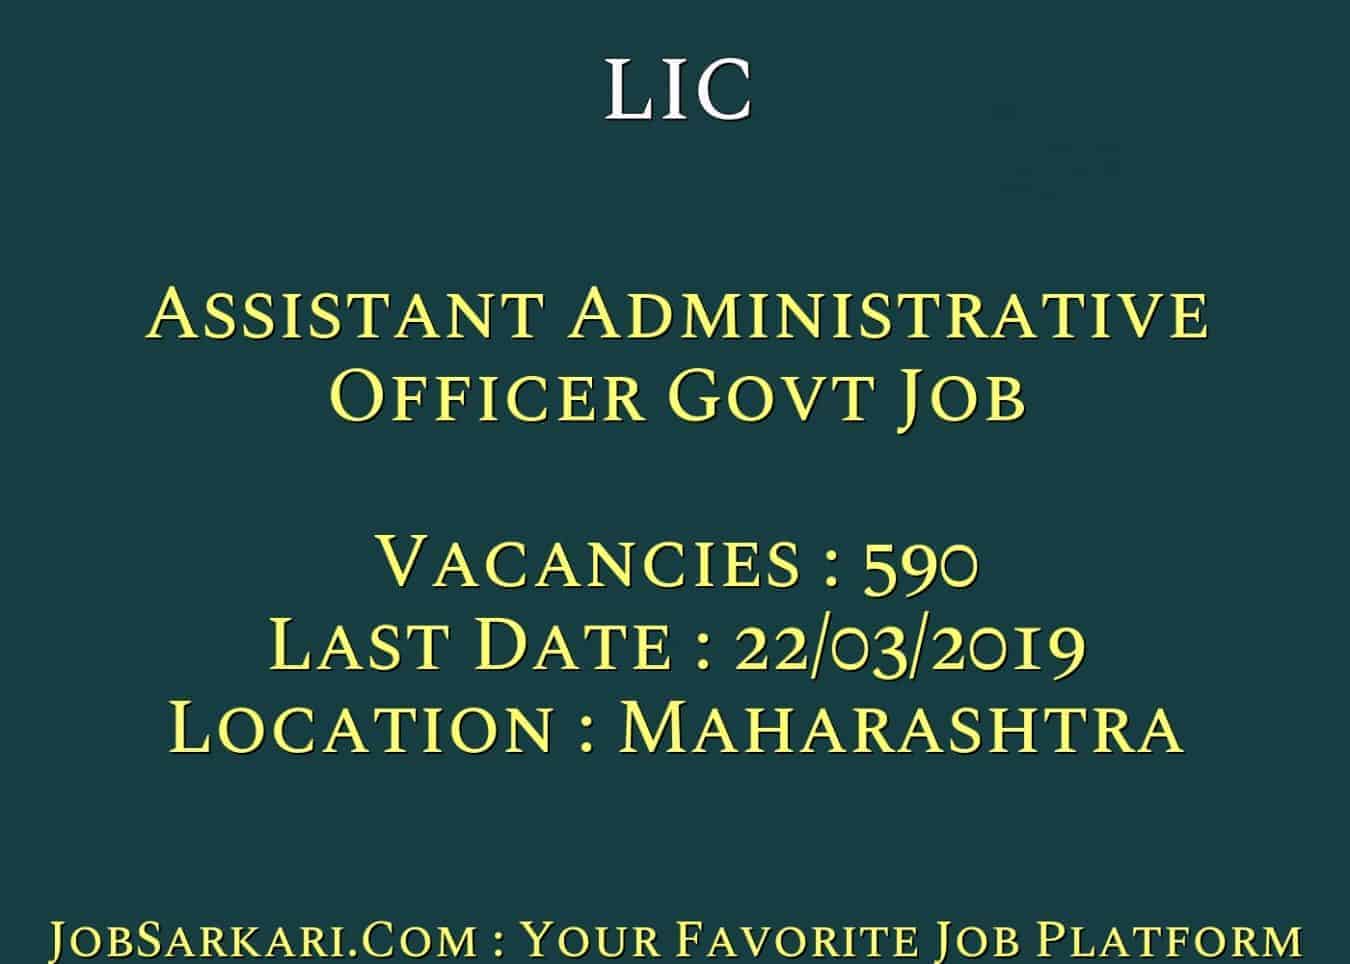 LIC Recruitment 2019 For Assistant Administrative Officer Govt Job